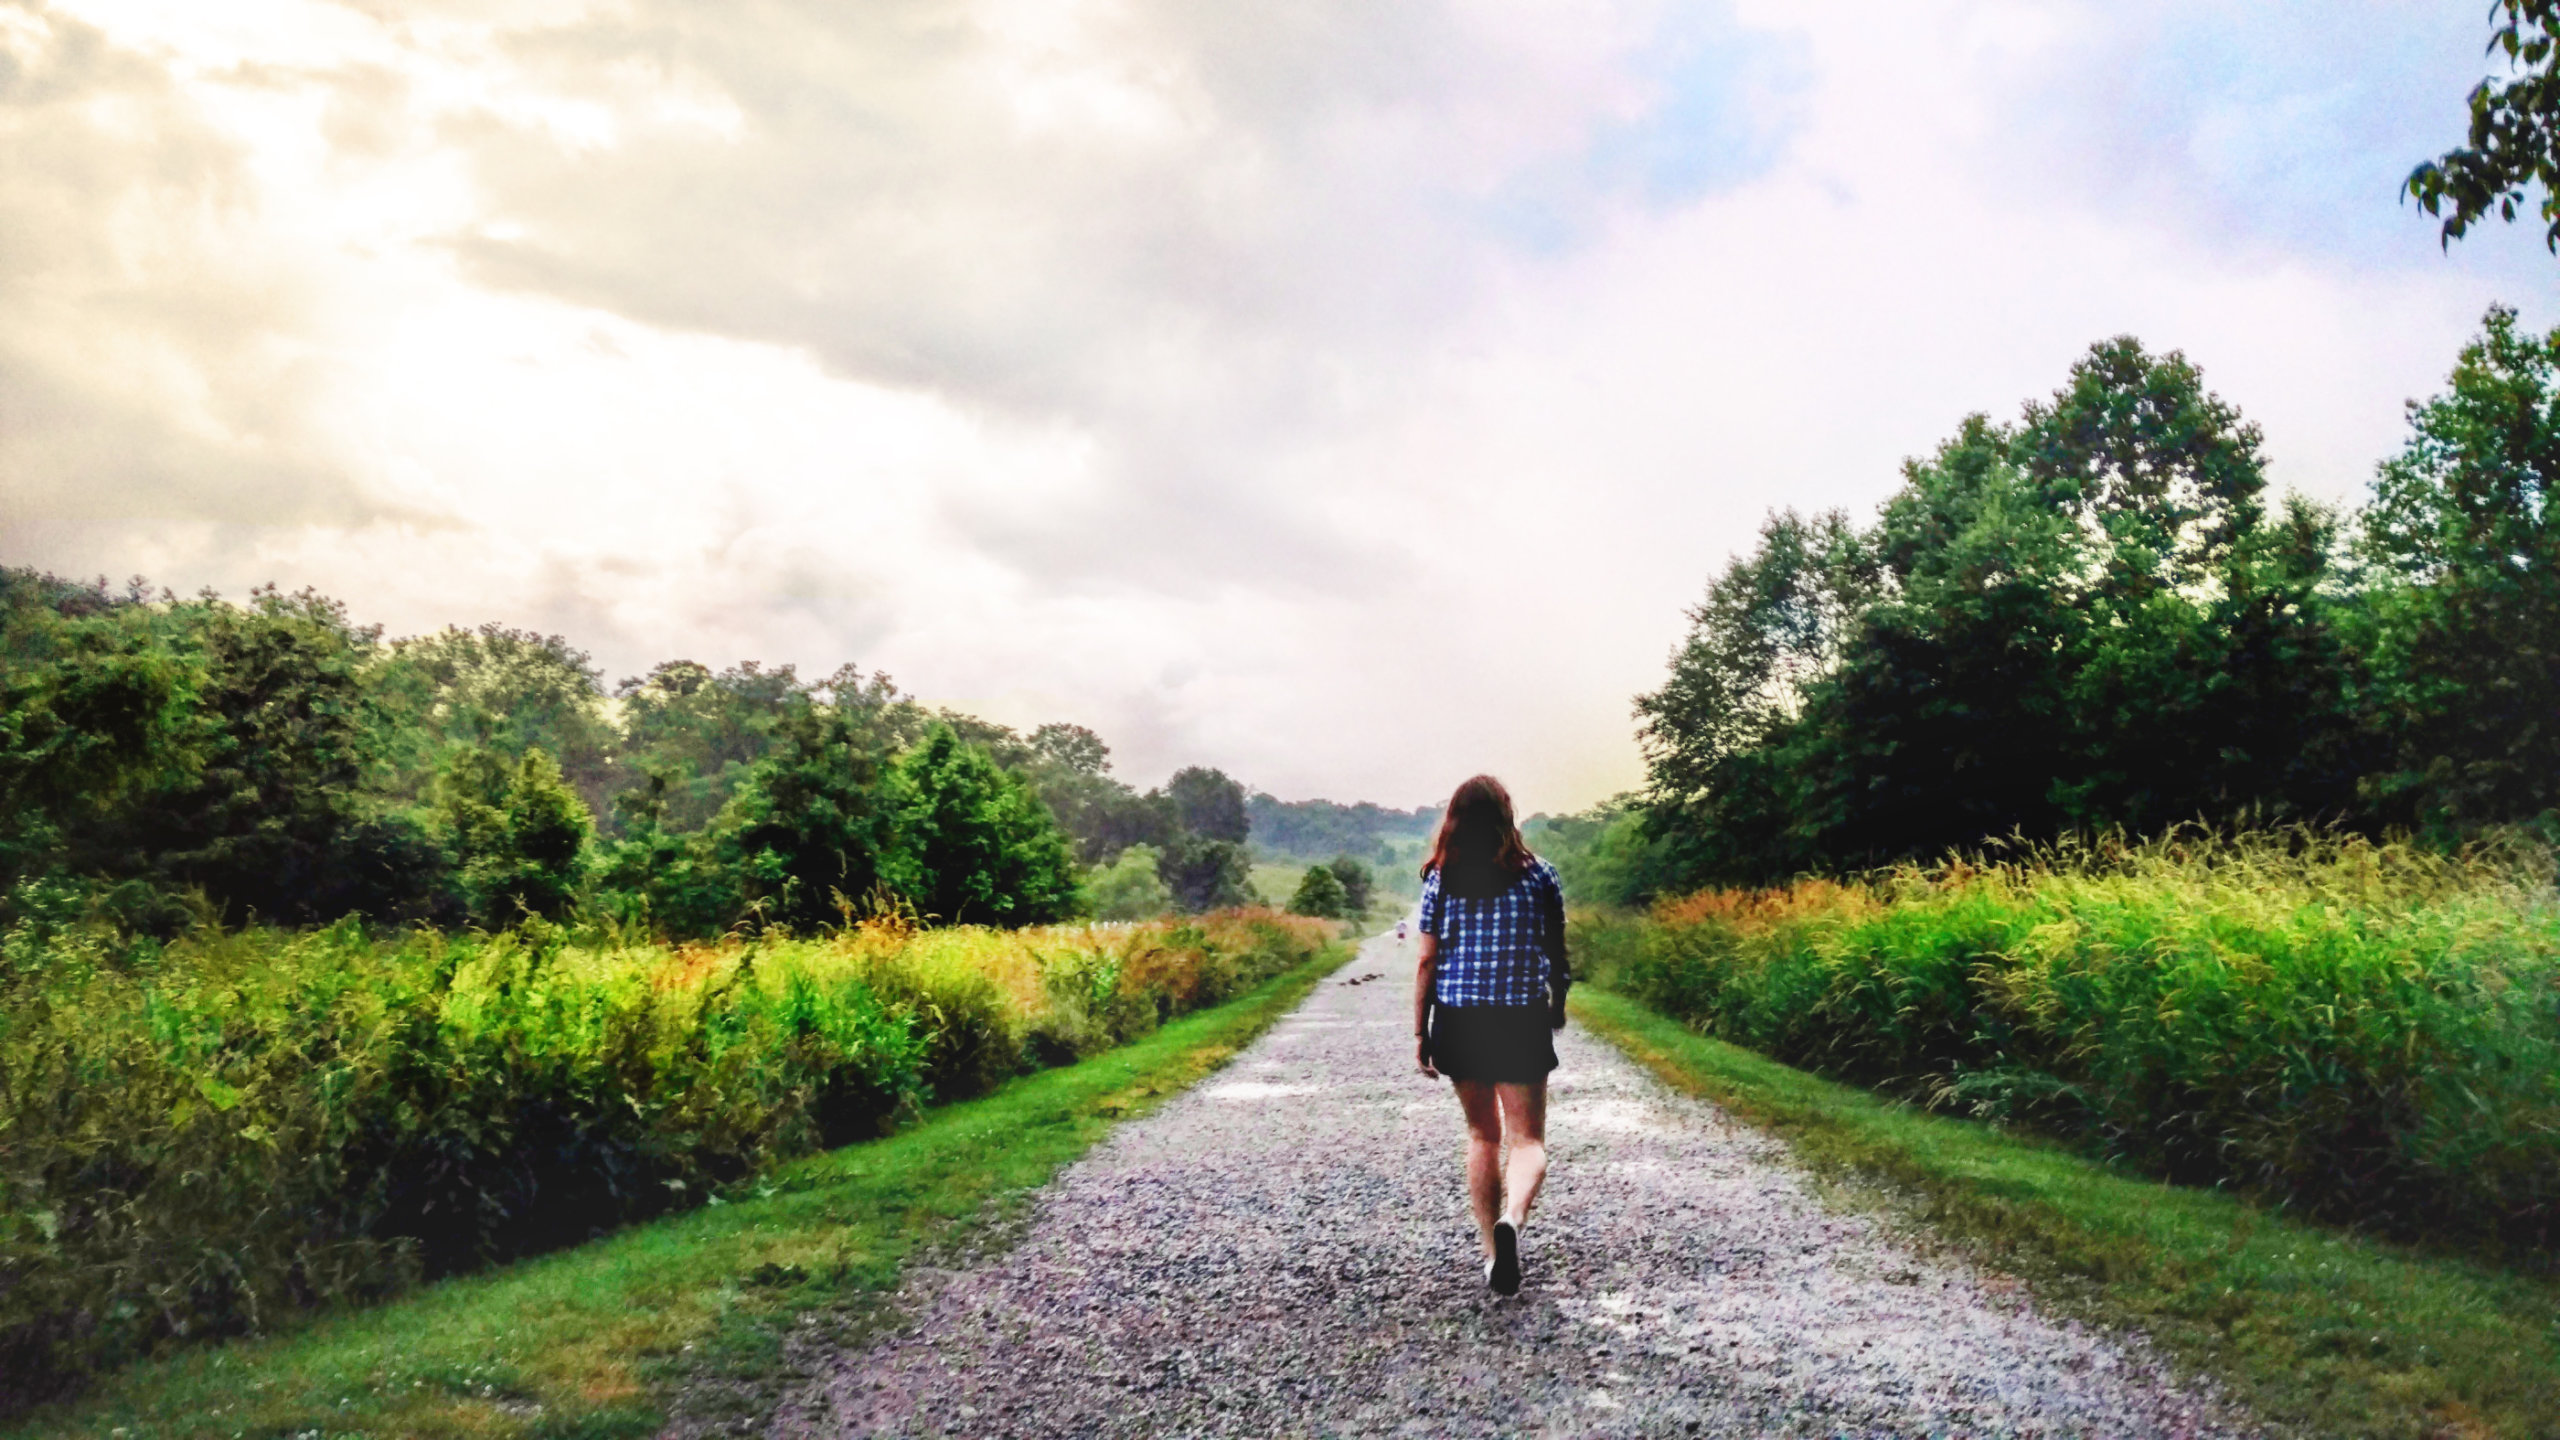 A woman walks along a long gravel path through a green natural landscape.